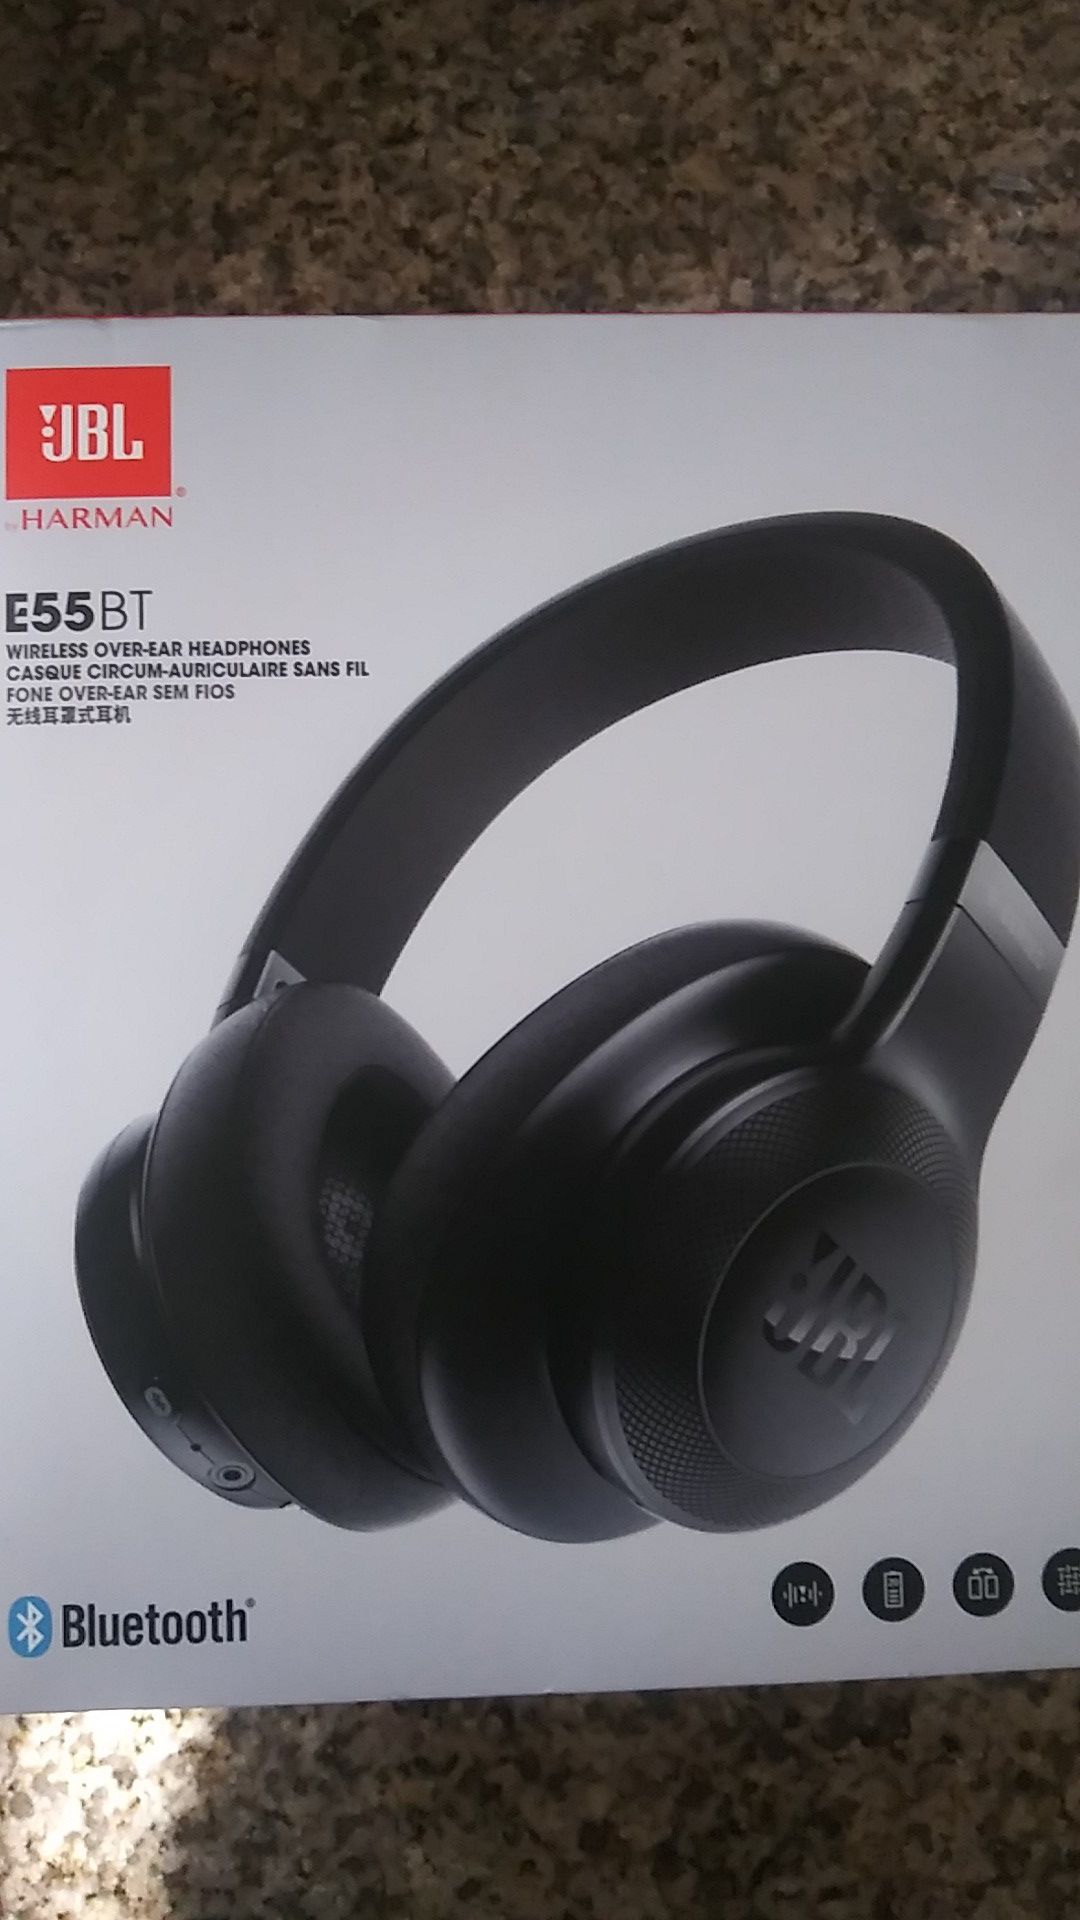 Brand new JBL wireless headphones